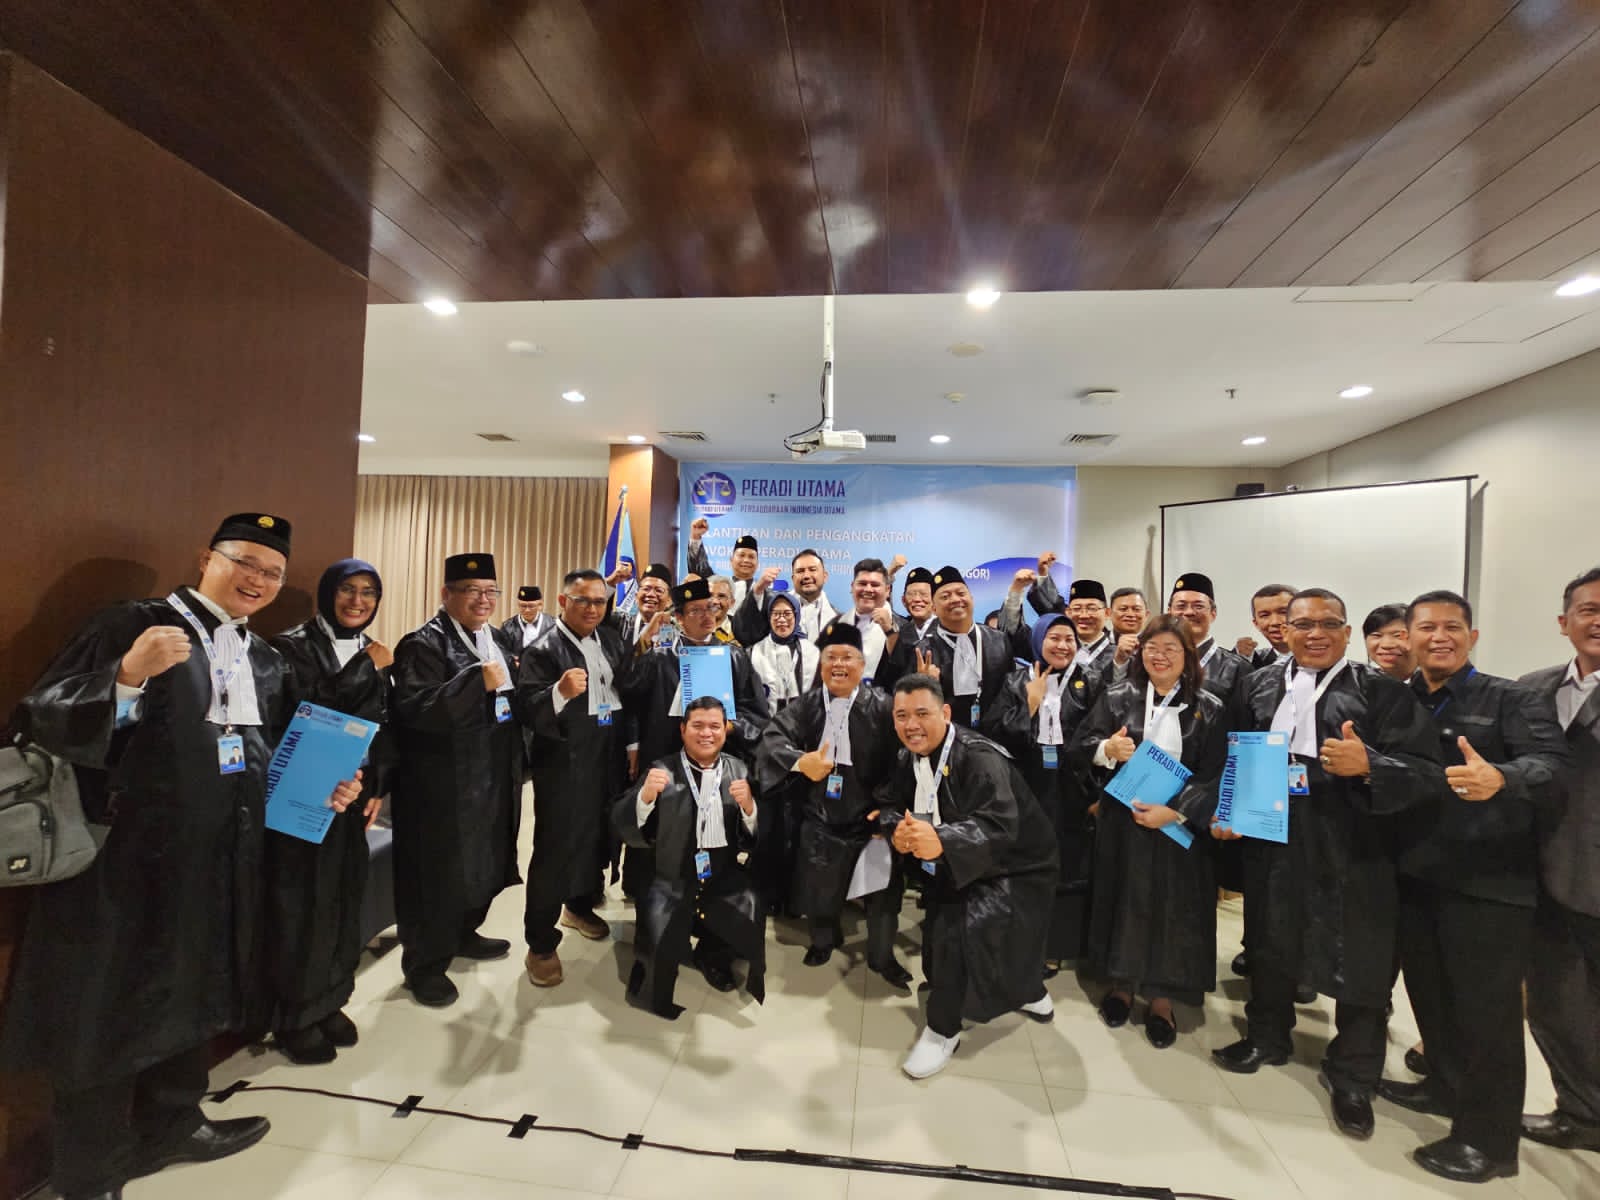 Ketum Peradi Utama Hardi Fardiansyah Lantik 34 Advokat, Termasuk Ismail Novendra